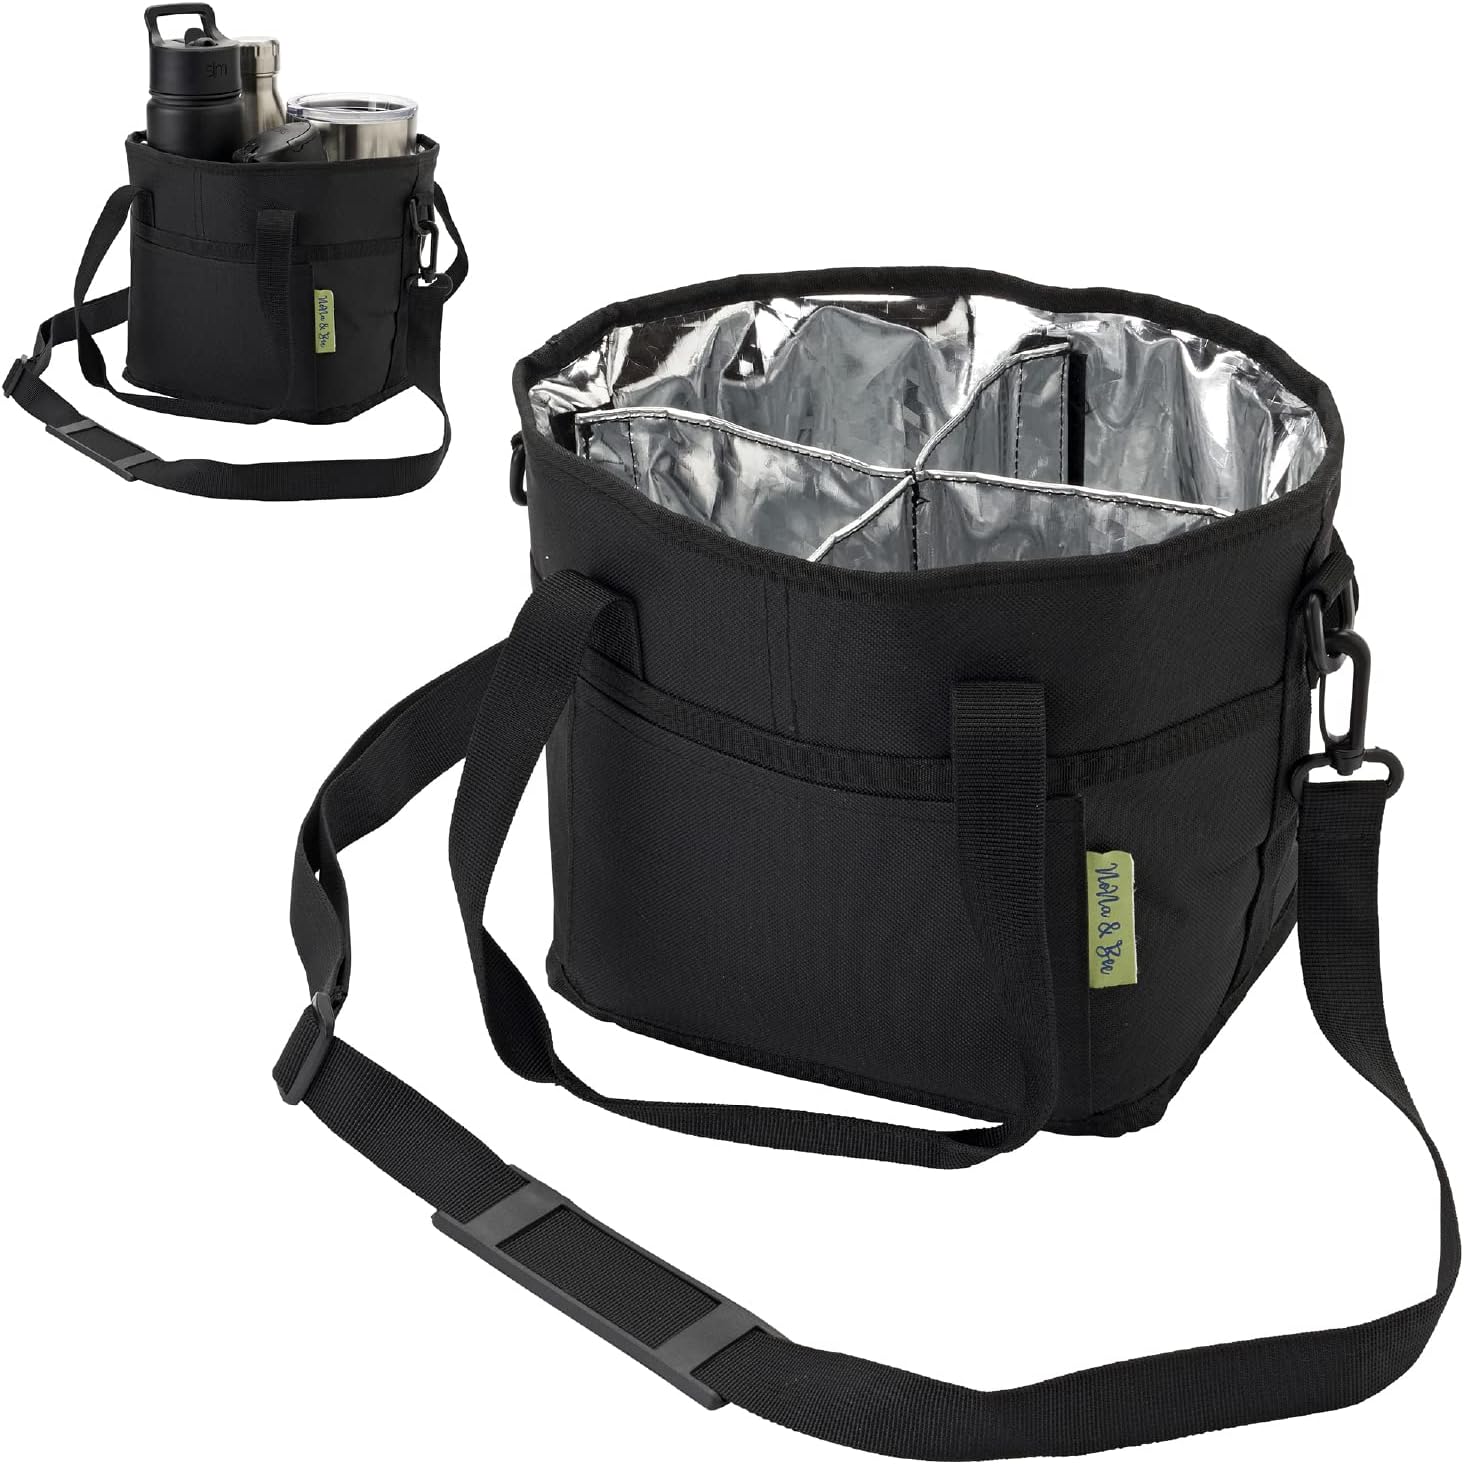 Herculean Luggage Cup Holder - Universal Fit Drink Holder for Most Suitcase  Handles - Caddy Bag Accessory for Beverage Holder, Bottle Holder - Flight